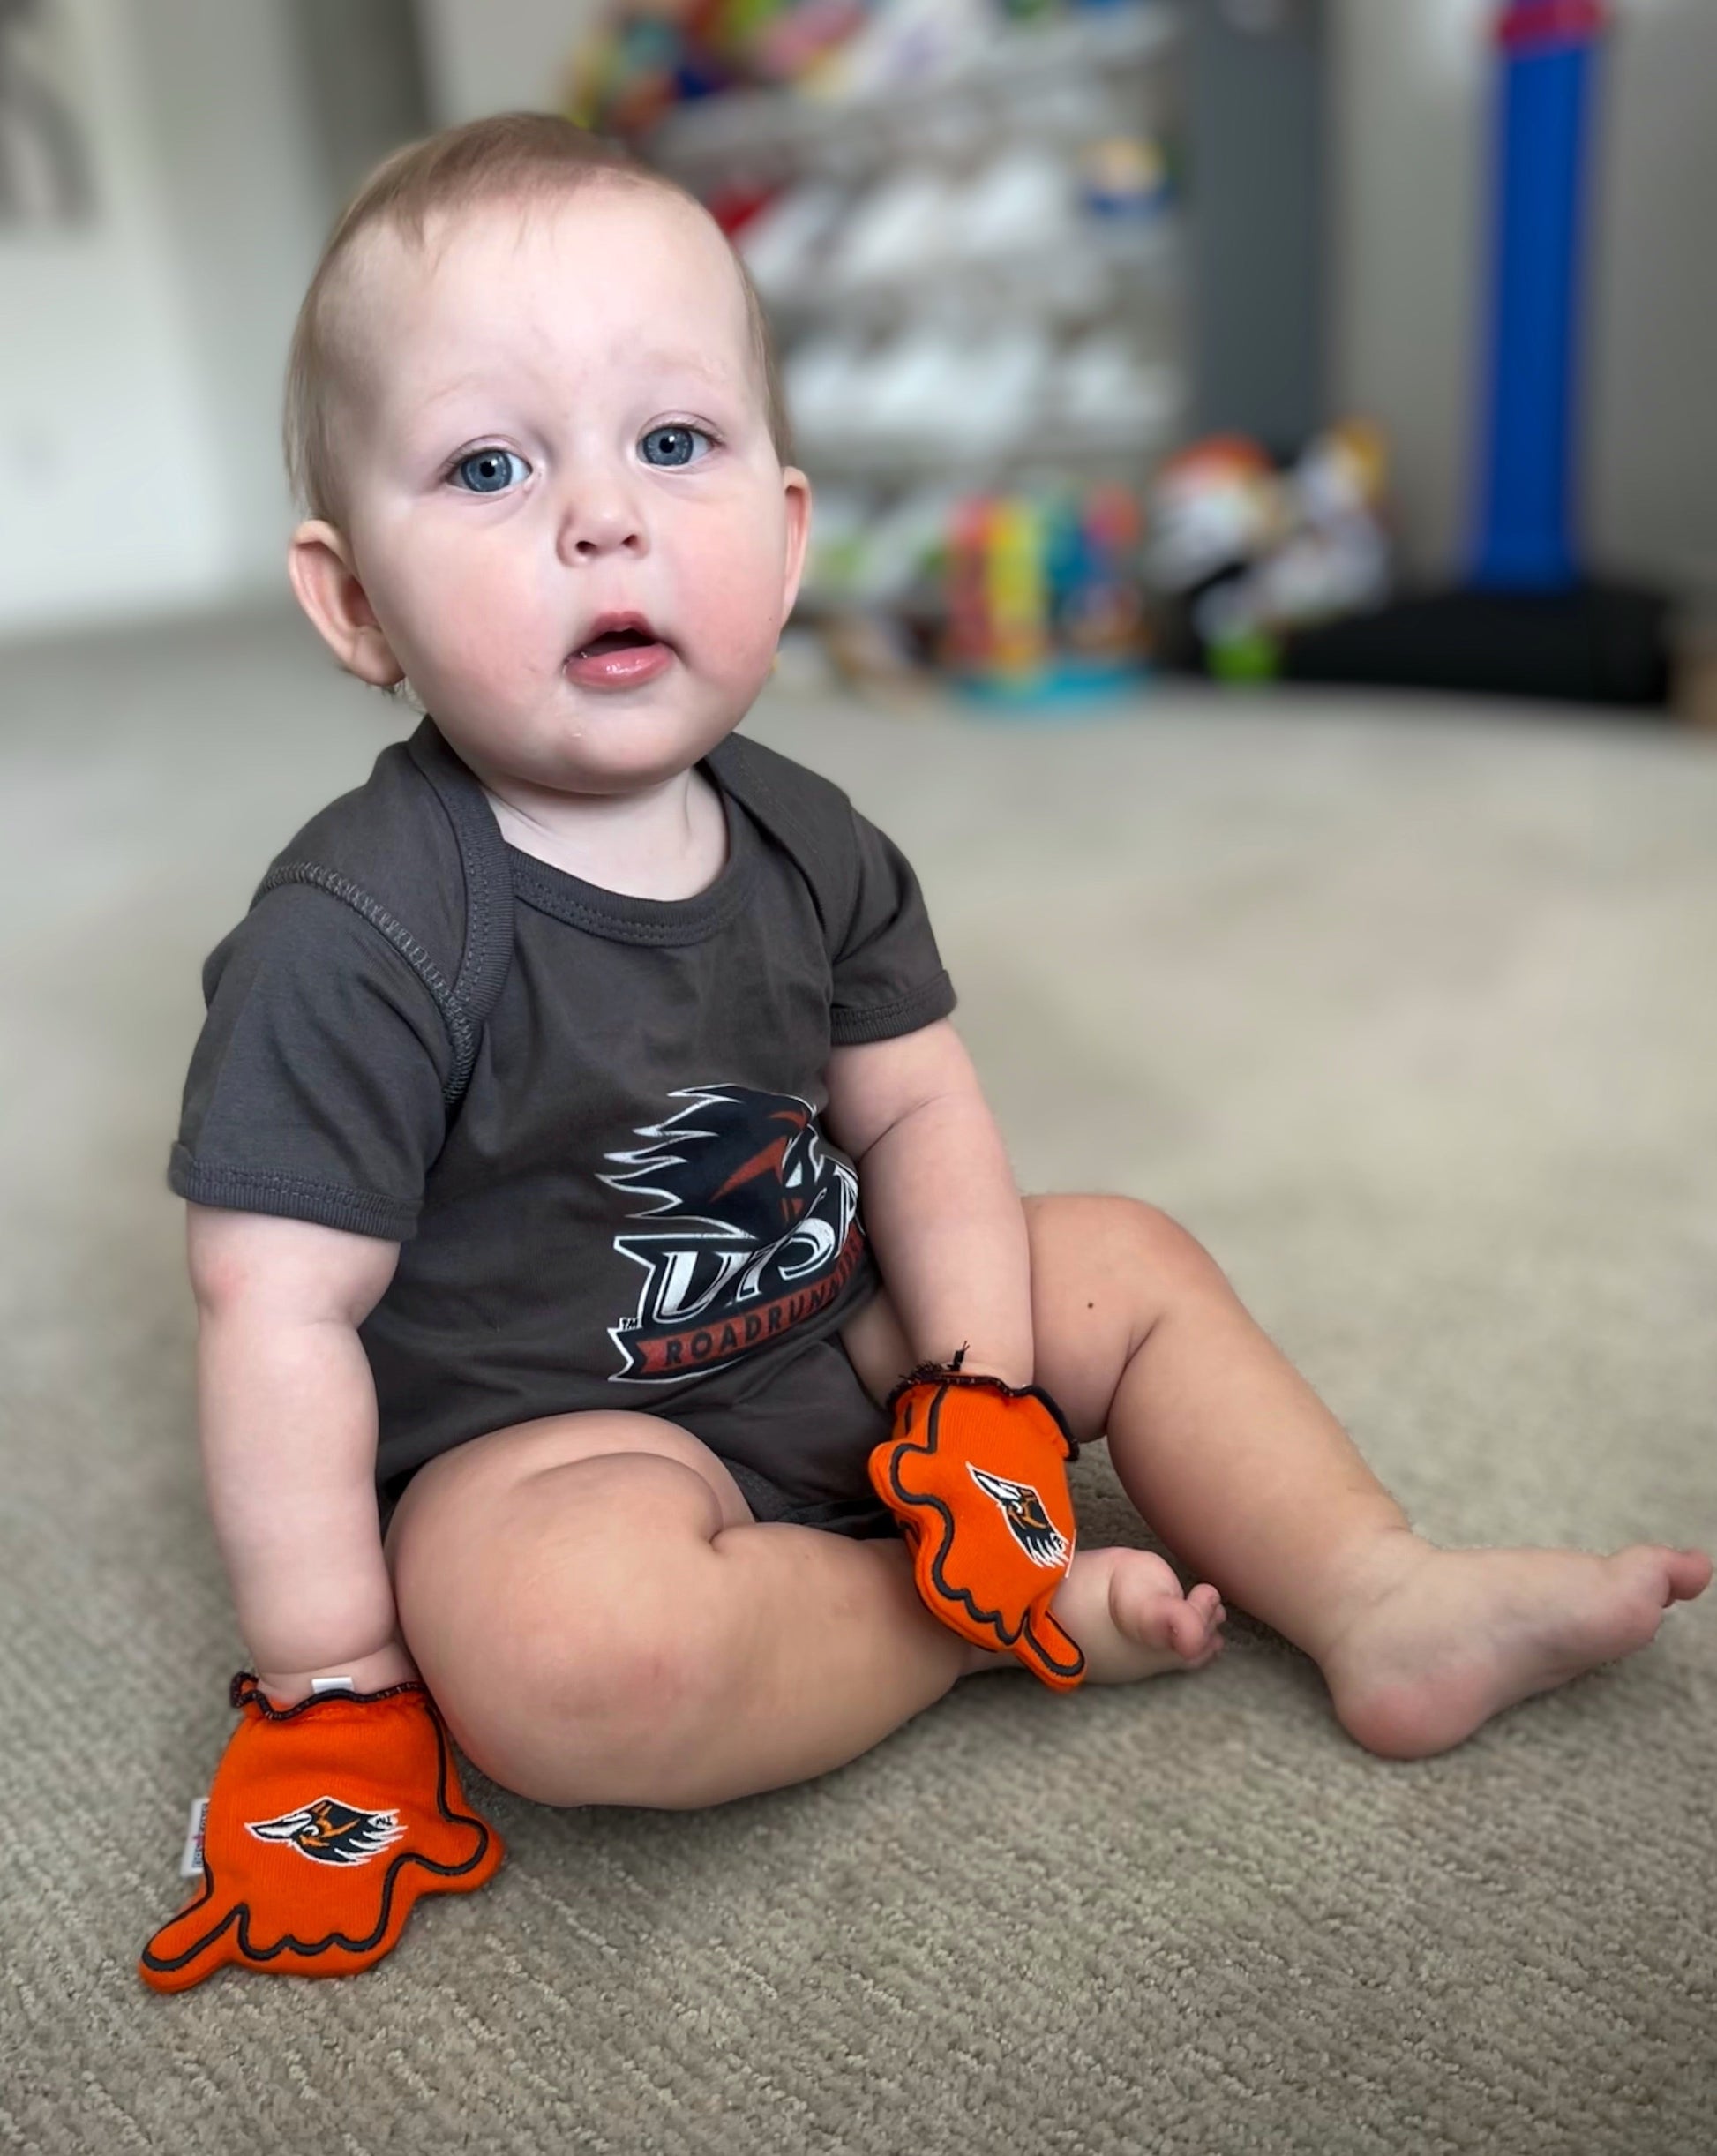 Infant wearing UTSA Go Roadrunners baby mittens in Orange